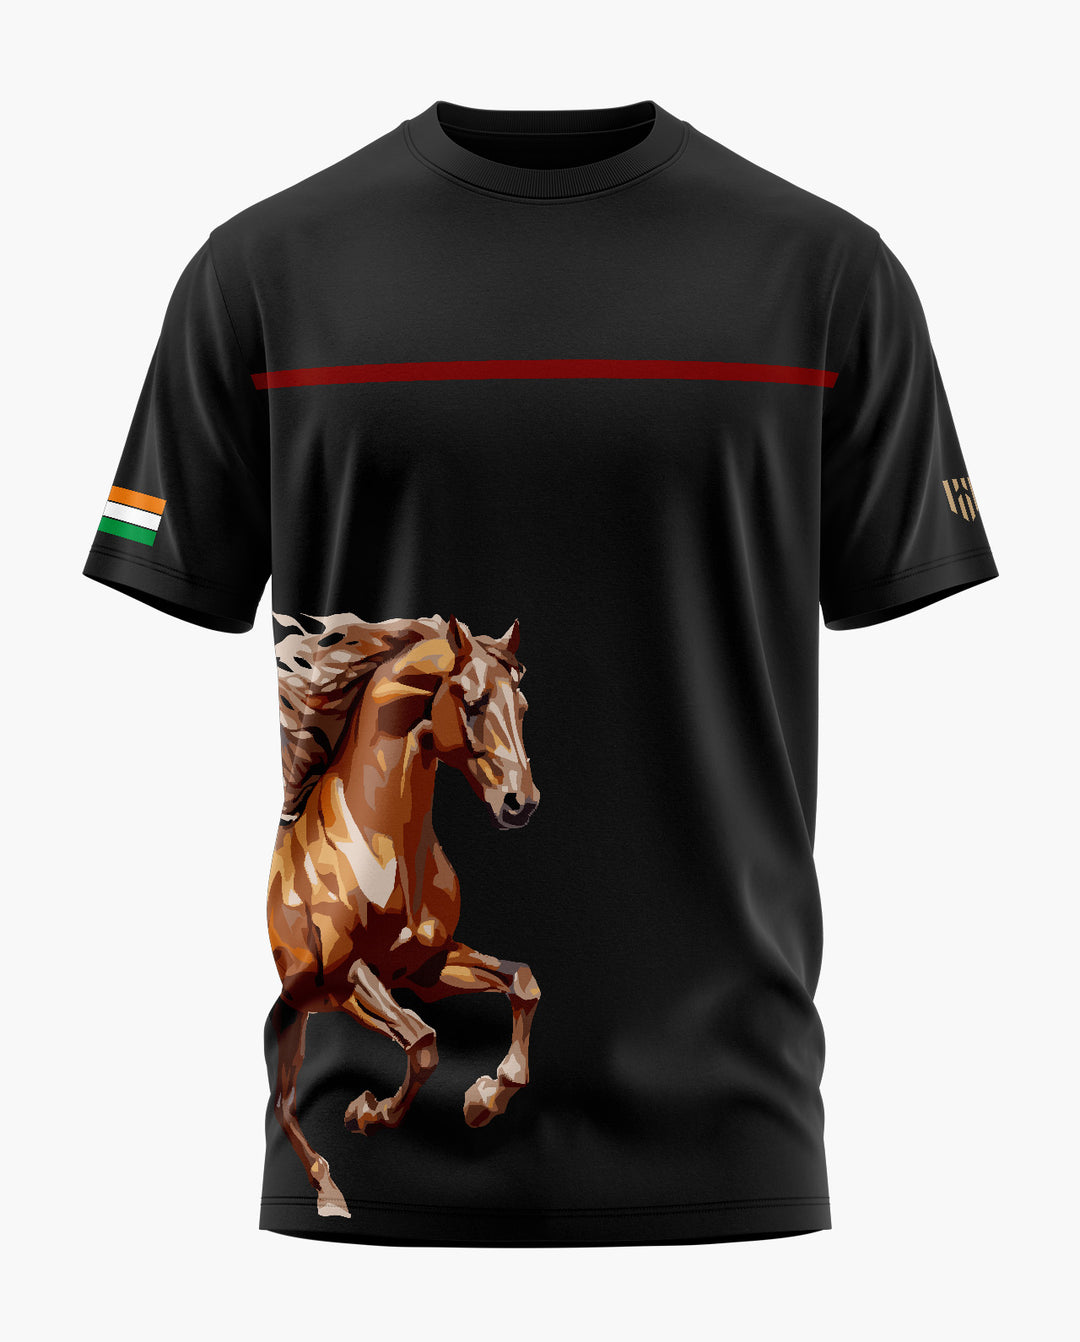 THE POONA HORSE T-Shirt - Aero Armour